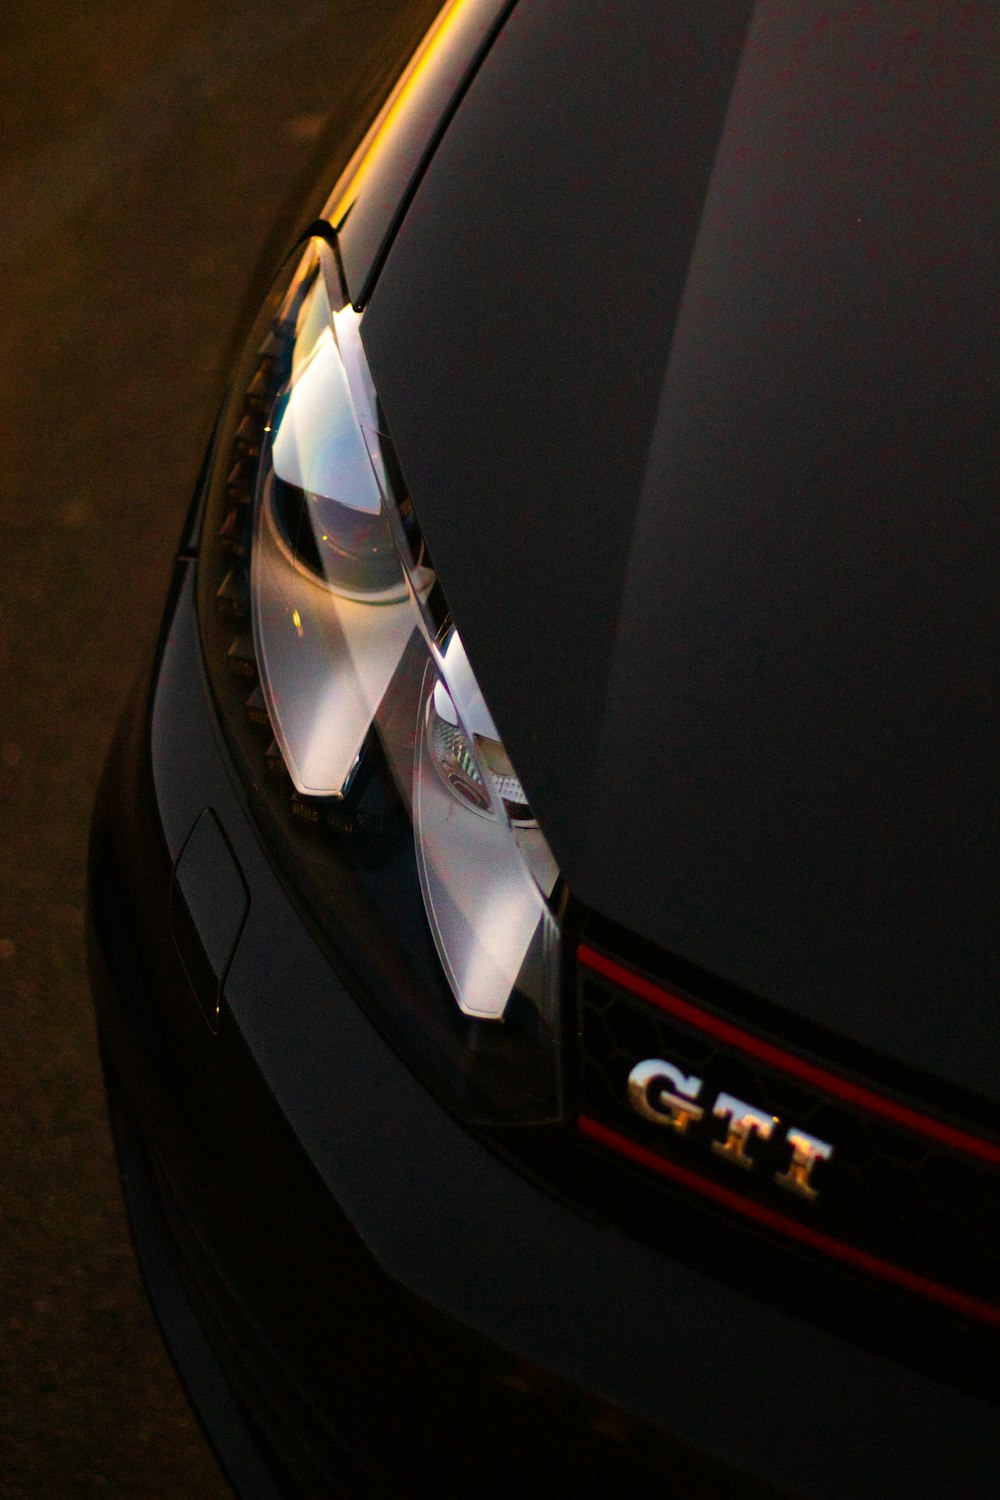 a close up of a car's headlights on a street